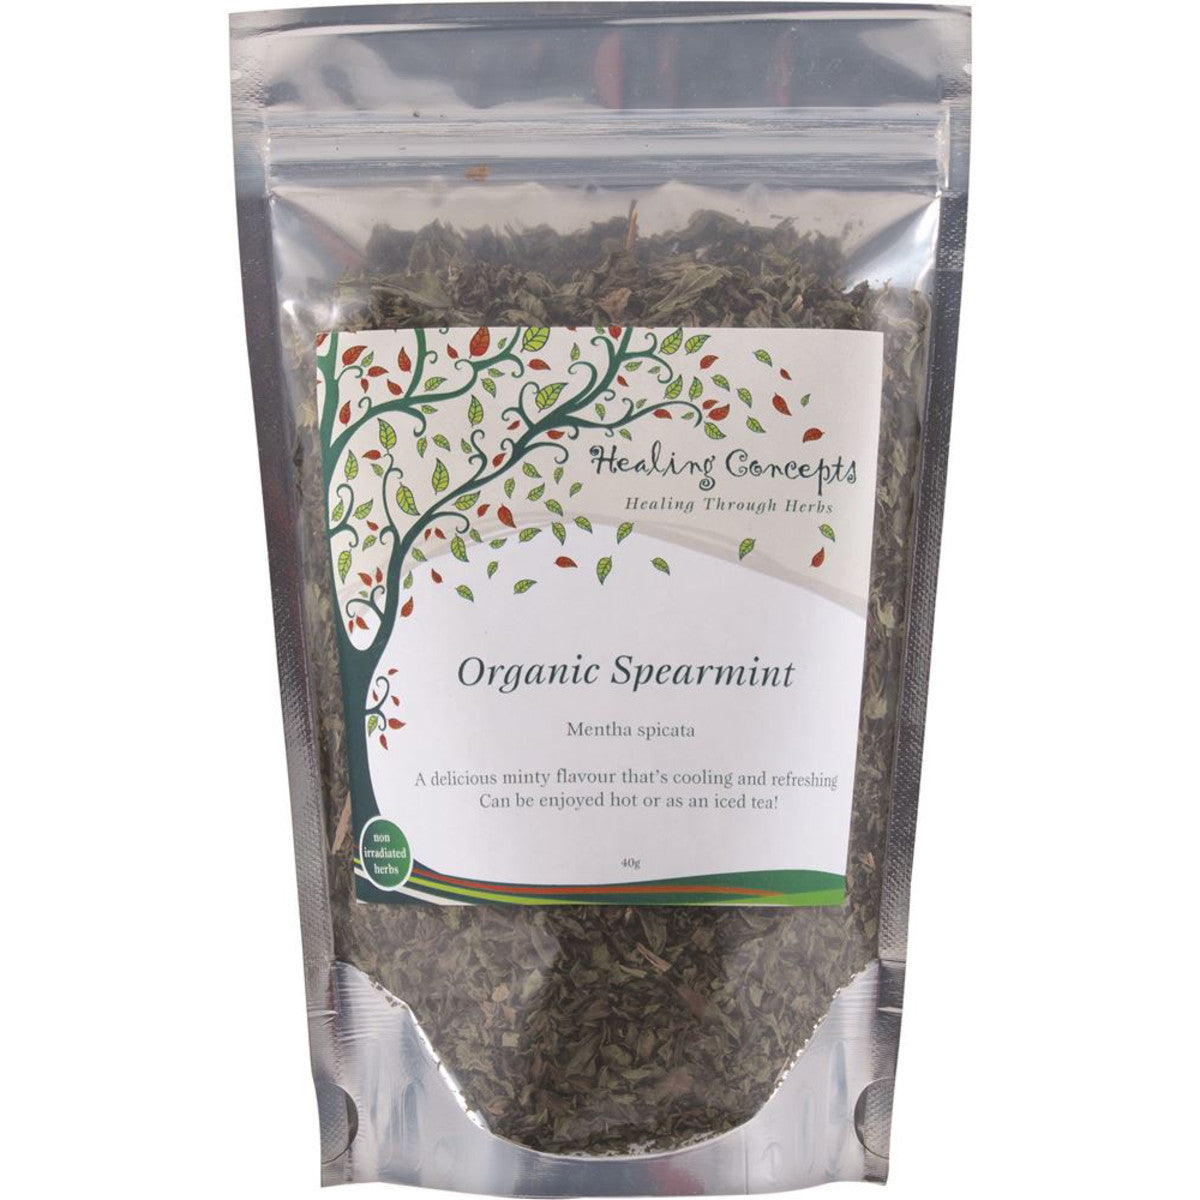 Healing Concepts Spearmint Tea 40g, Organic